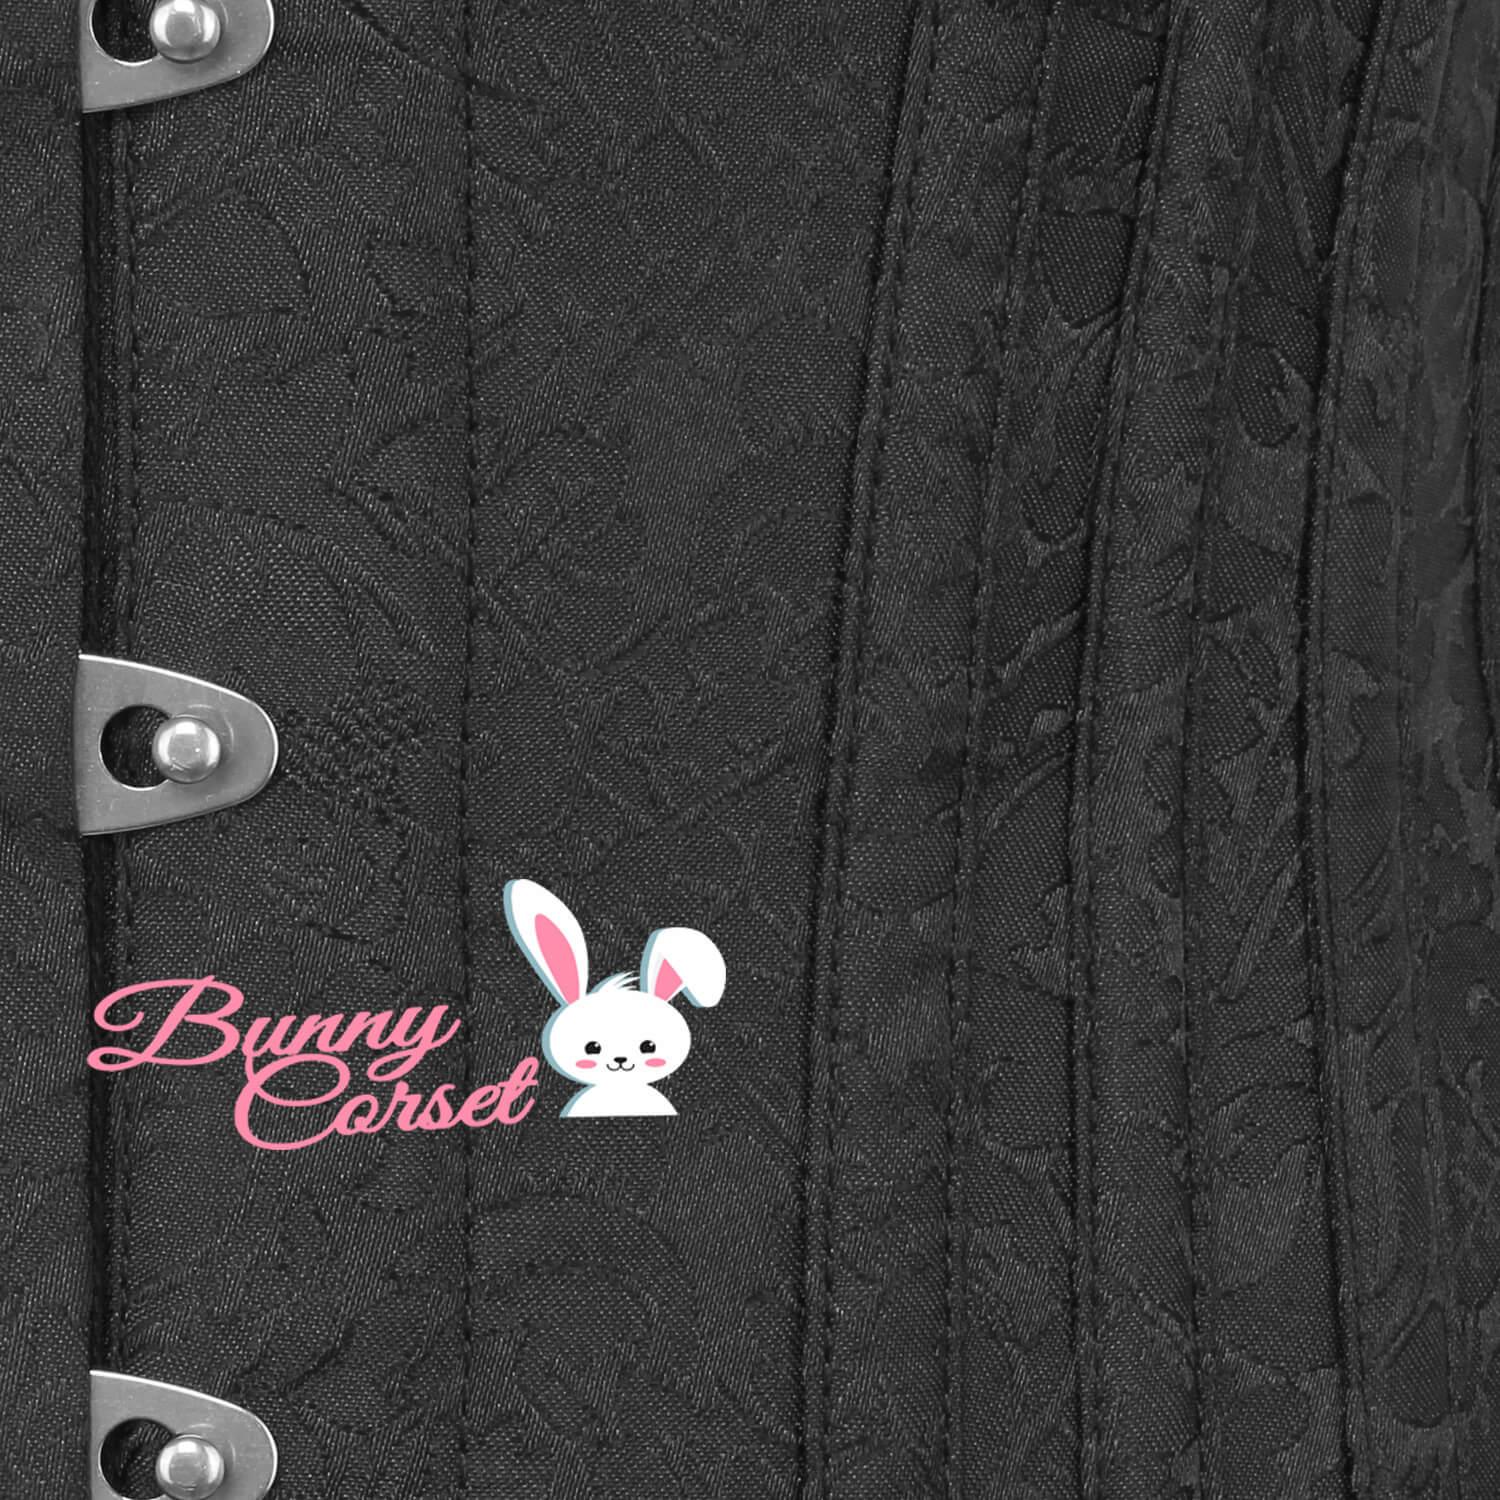 Get this perfect bespoke overbust corset – Bunny Corset